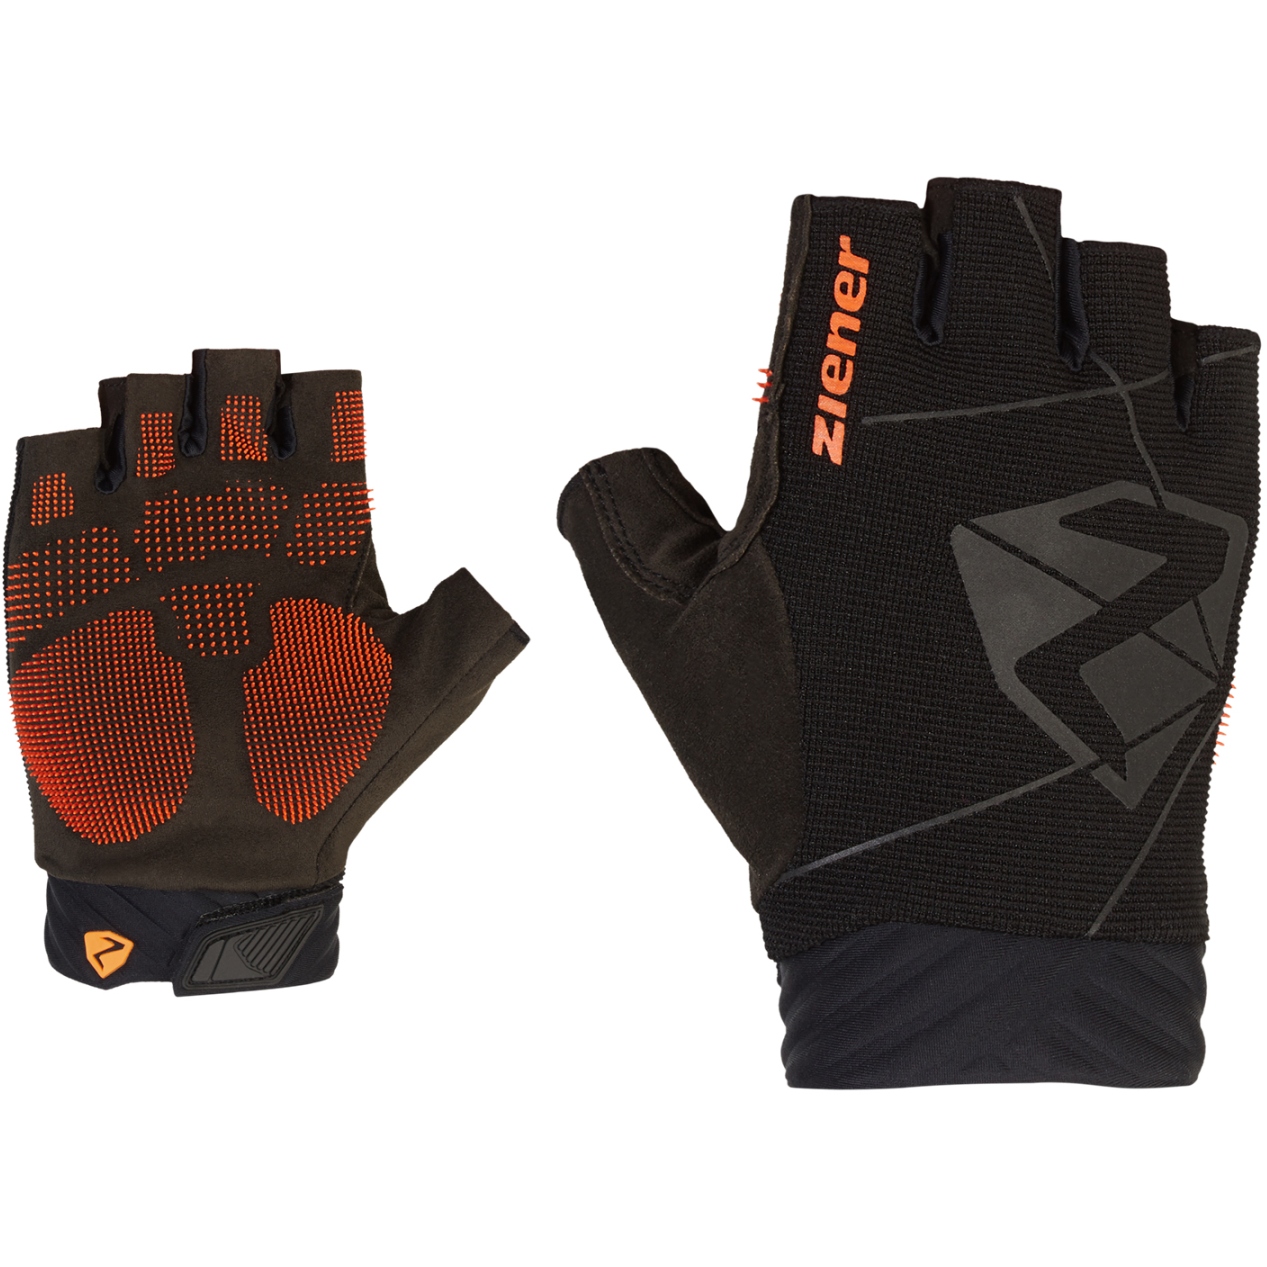 Picture of Ziener Cecko Bike Gloves - black